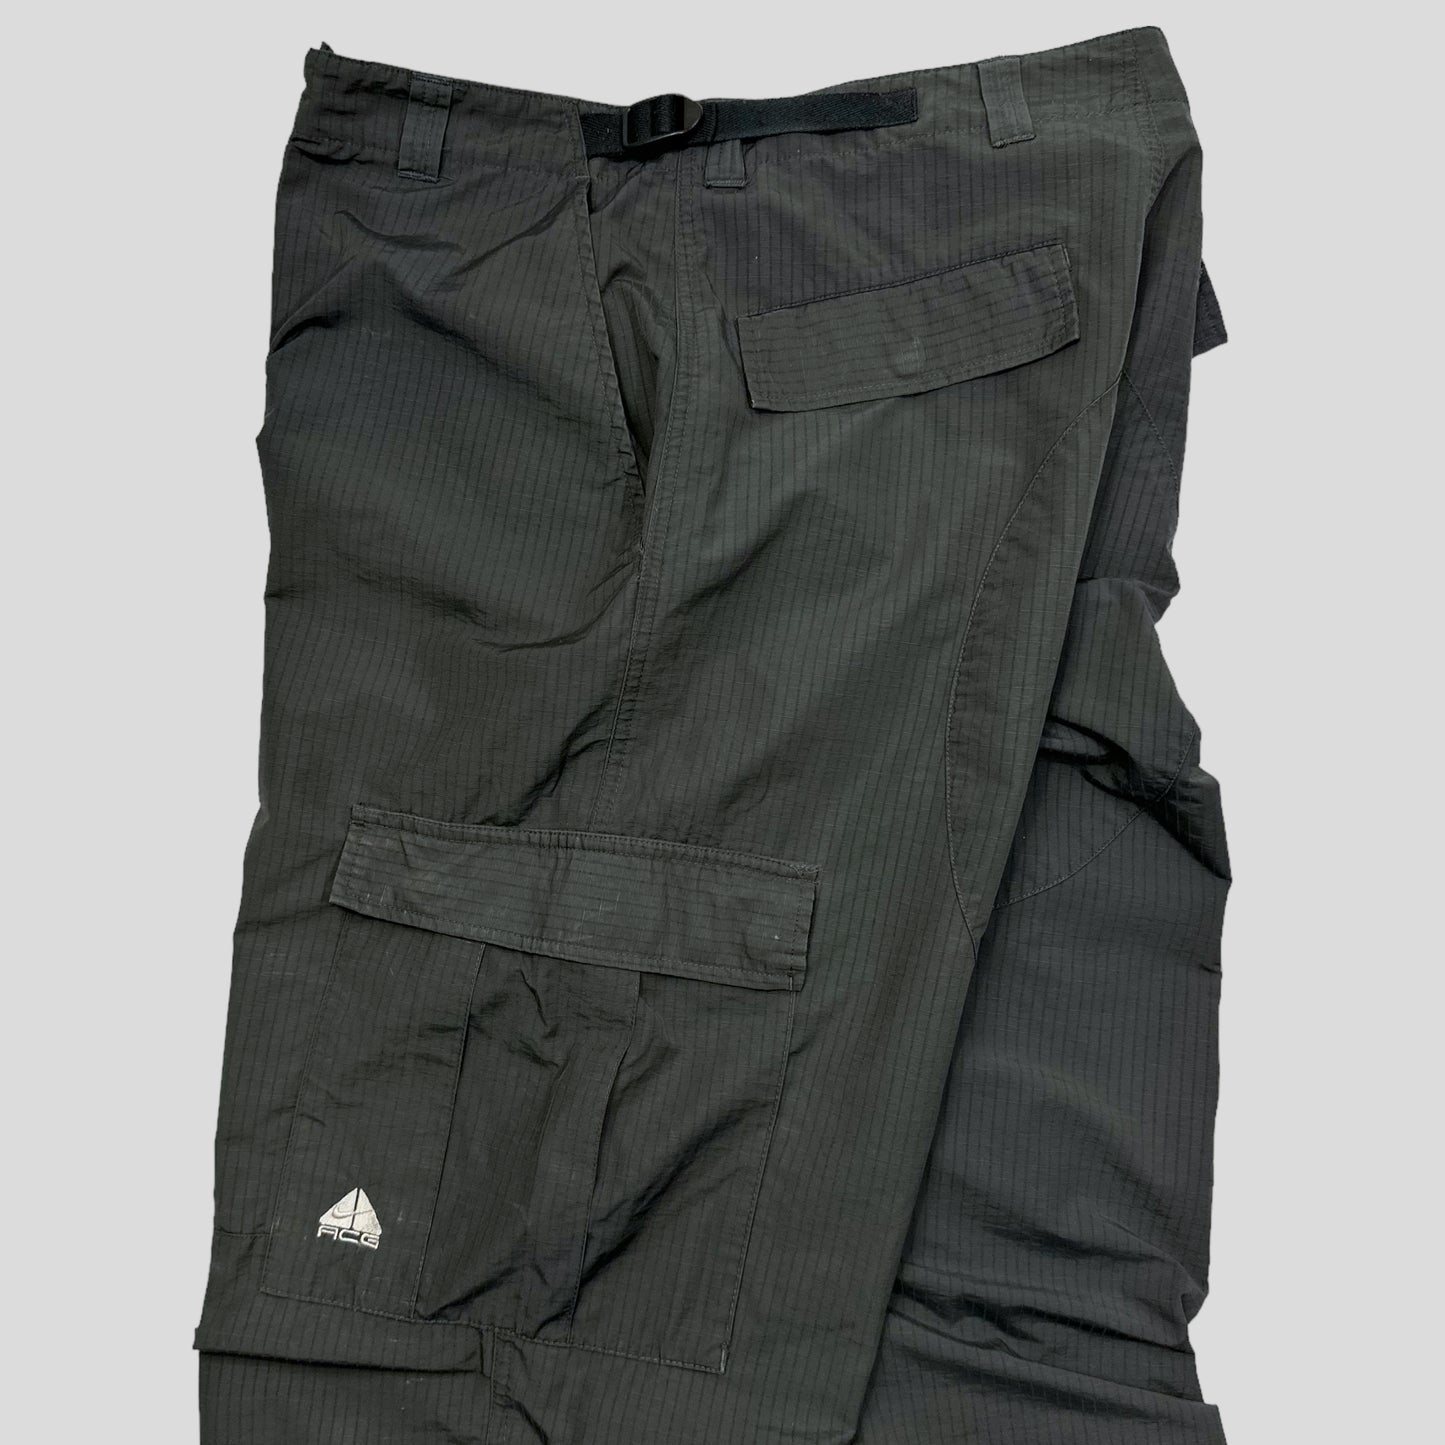 Nike ACG 1998 Ripstop Co-Nylon Cargo Trousers - M/L